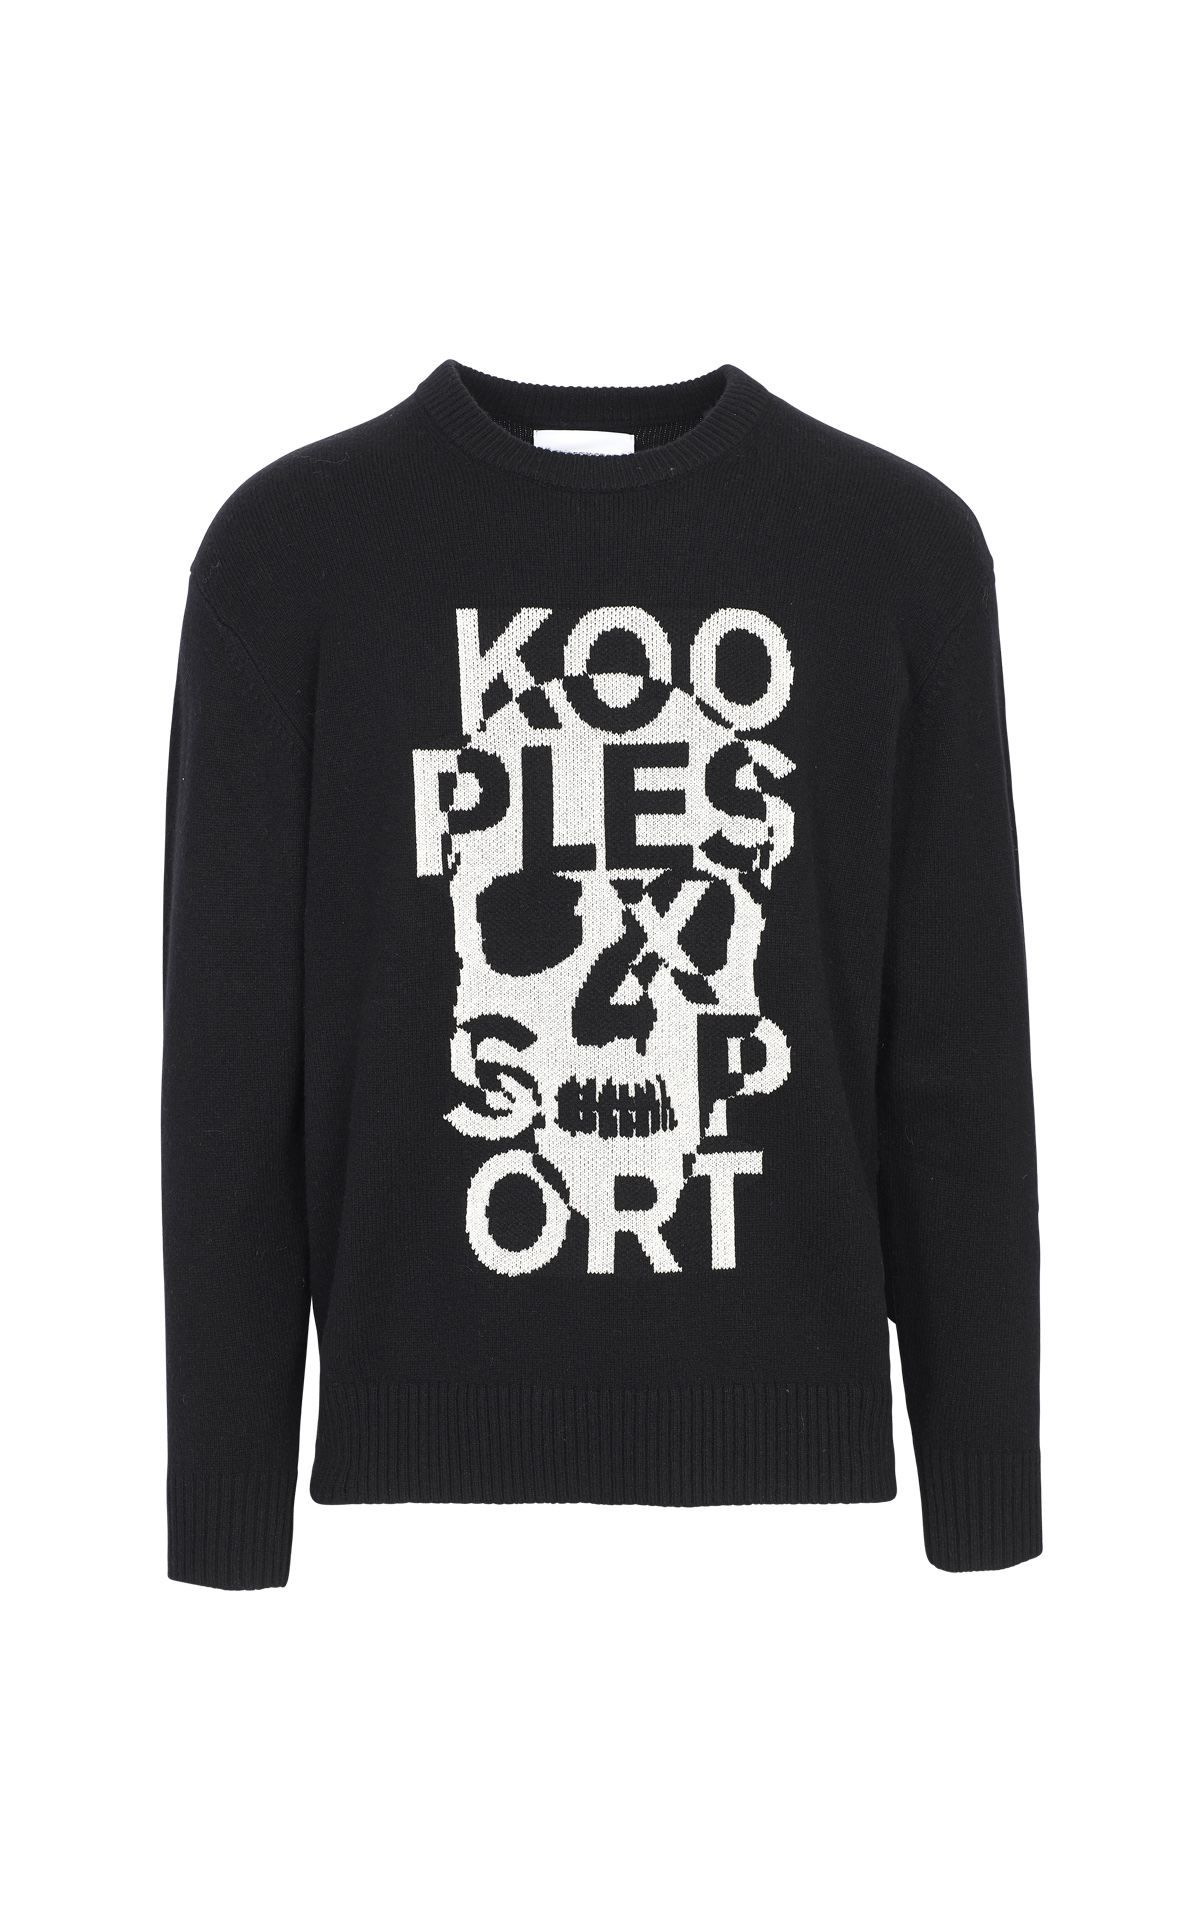 Black knit sweater the Kooples